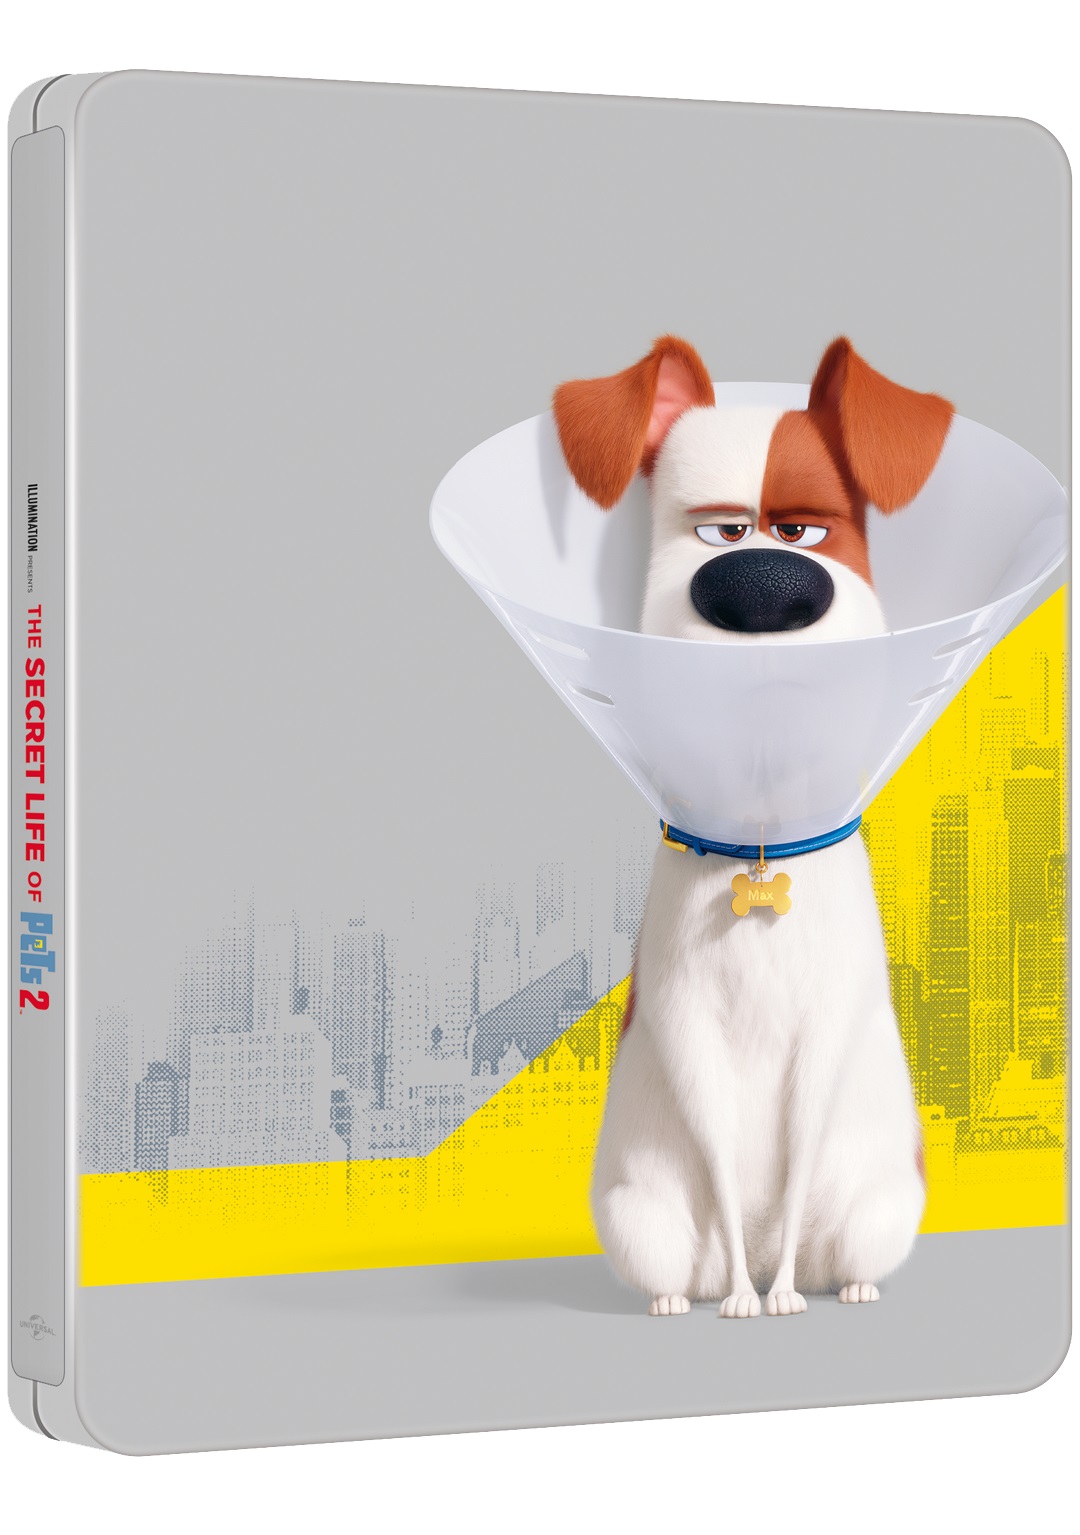 The Secret Life of Pets 2 / Singuri acasa 2 (Blu Ray Disc) Steelbook | Chris Renaud